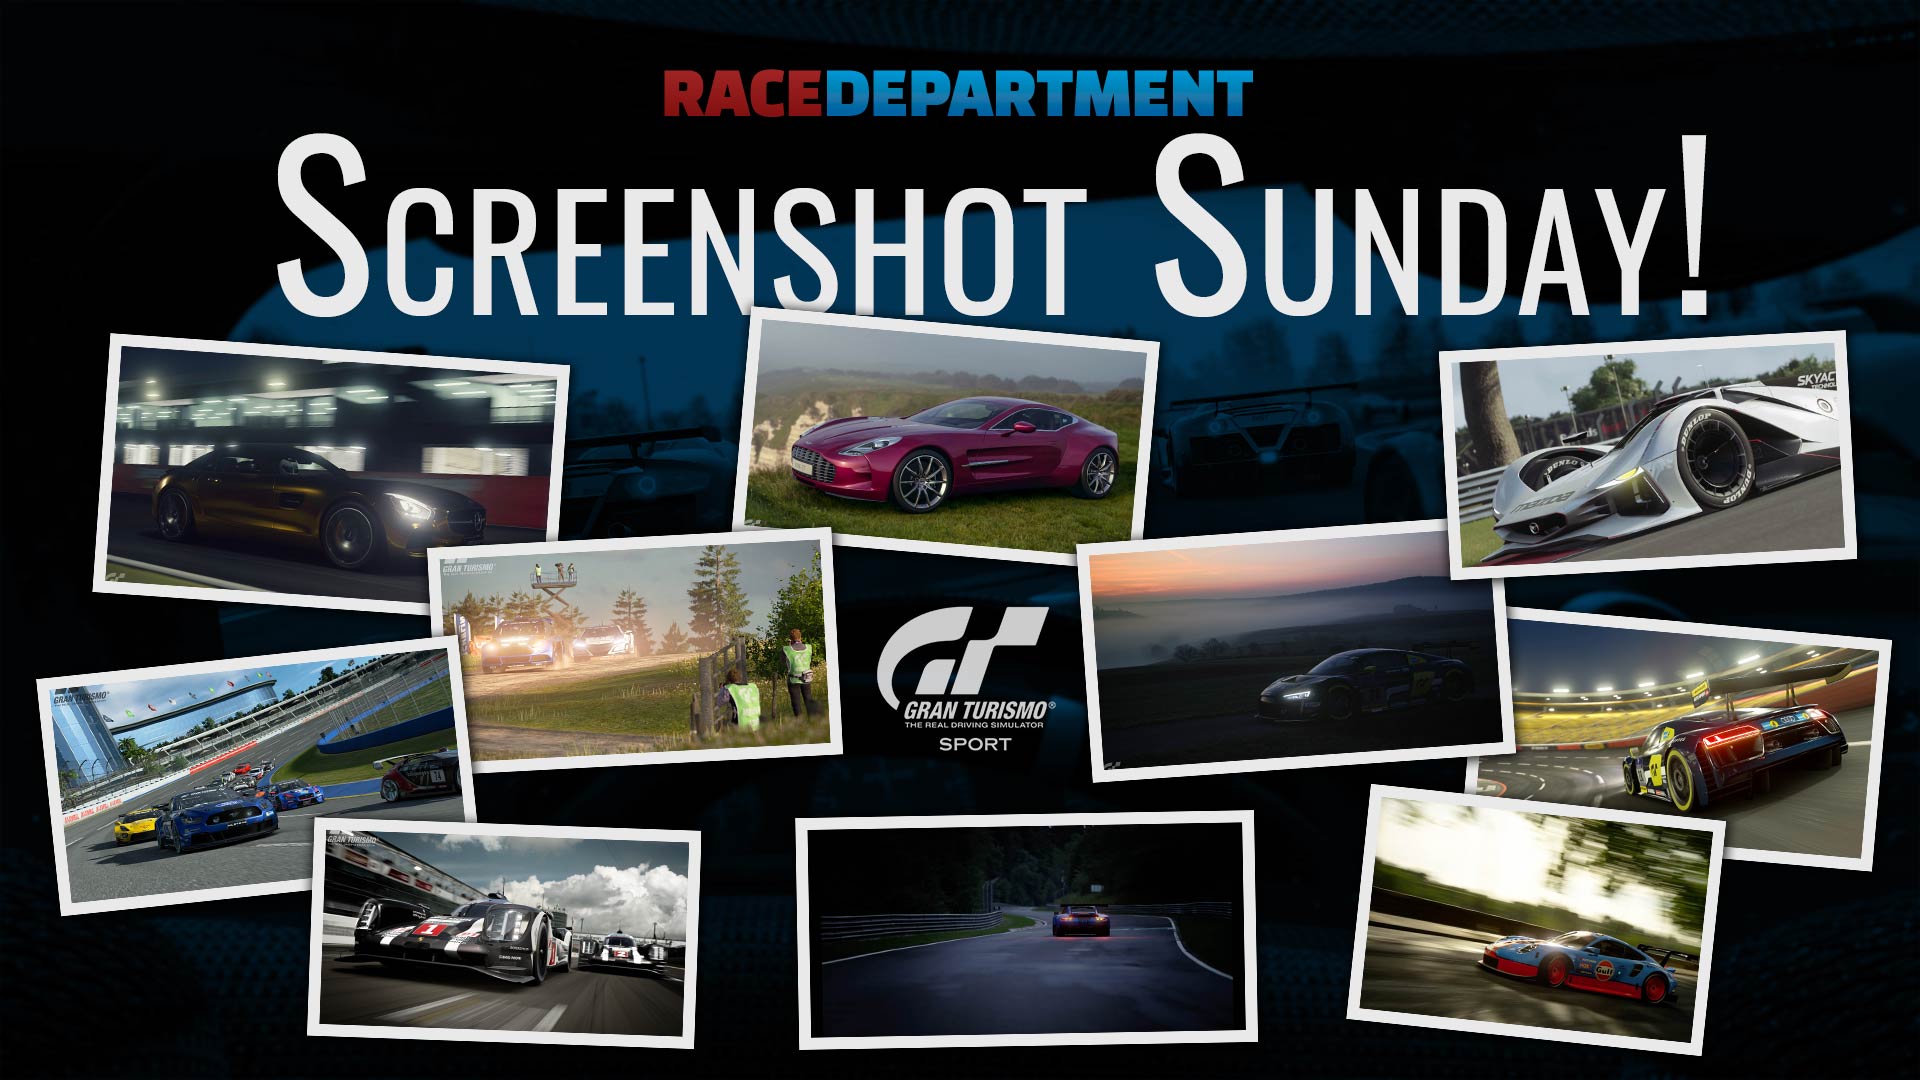 Screenshot Sunday - Gran Turismo Edition.jpg